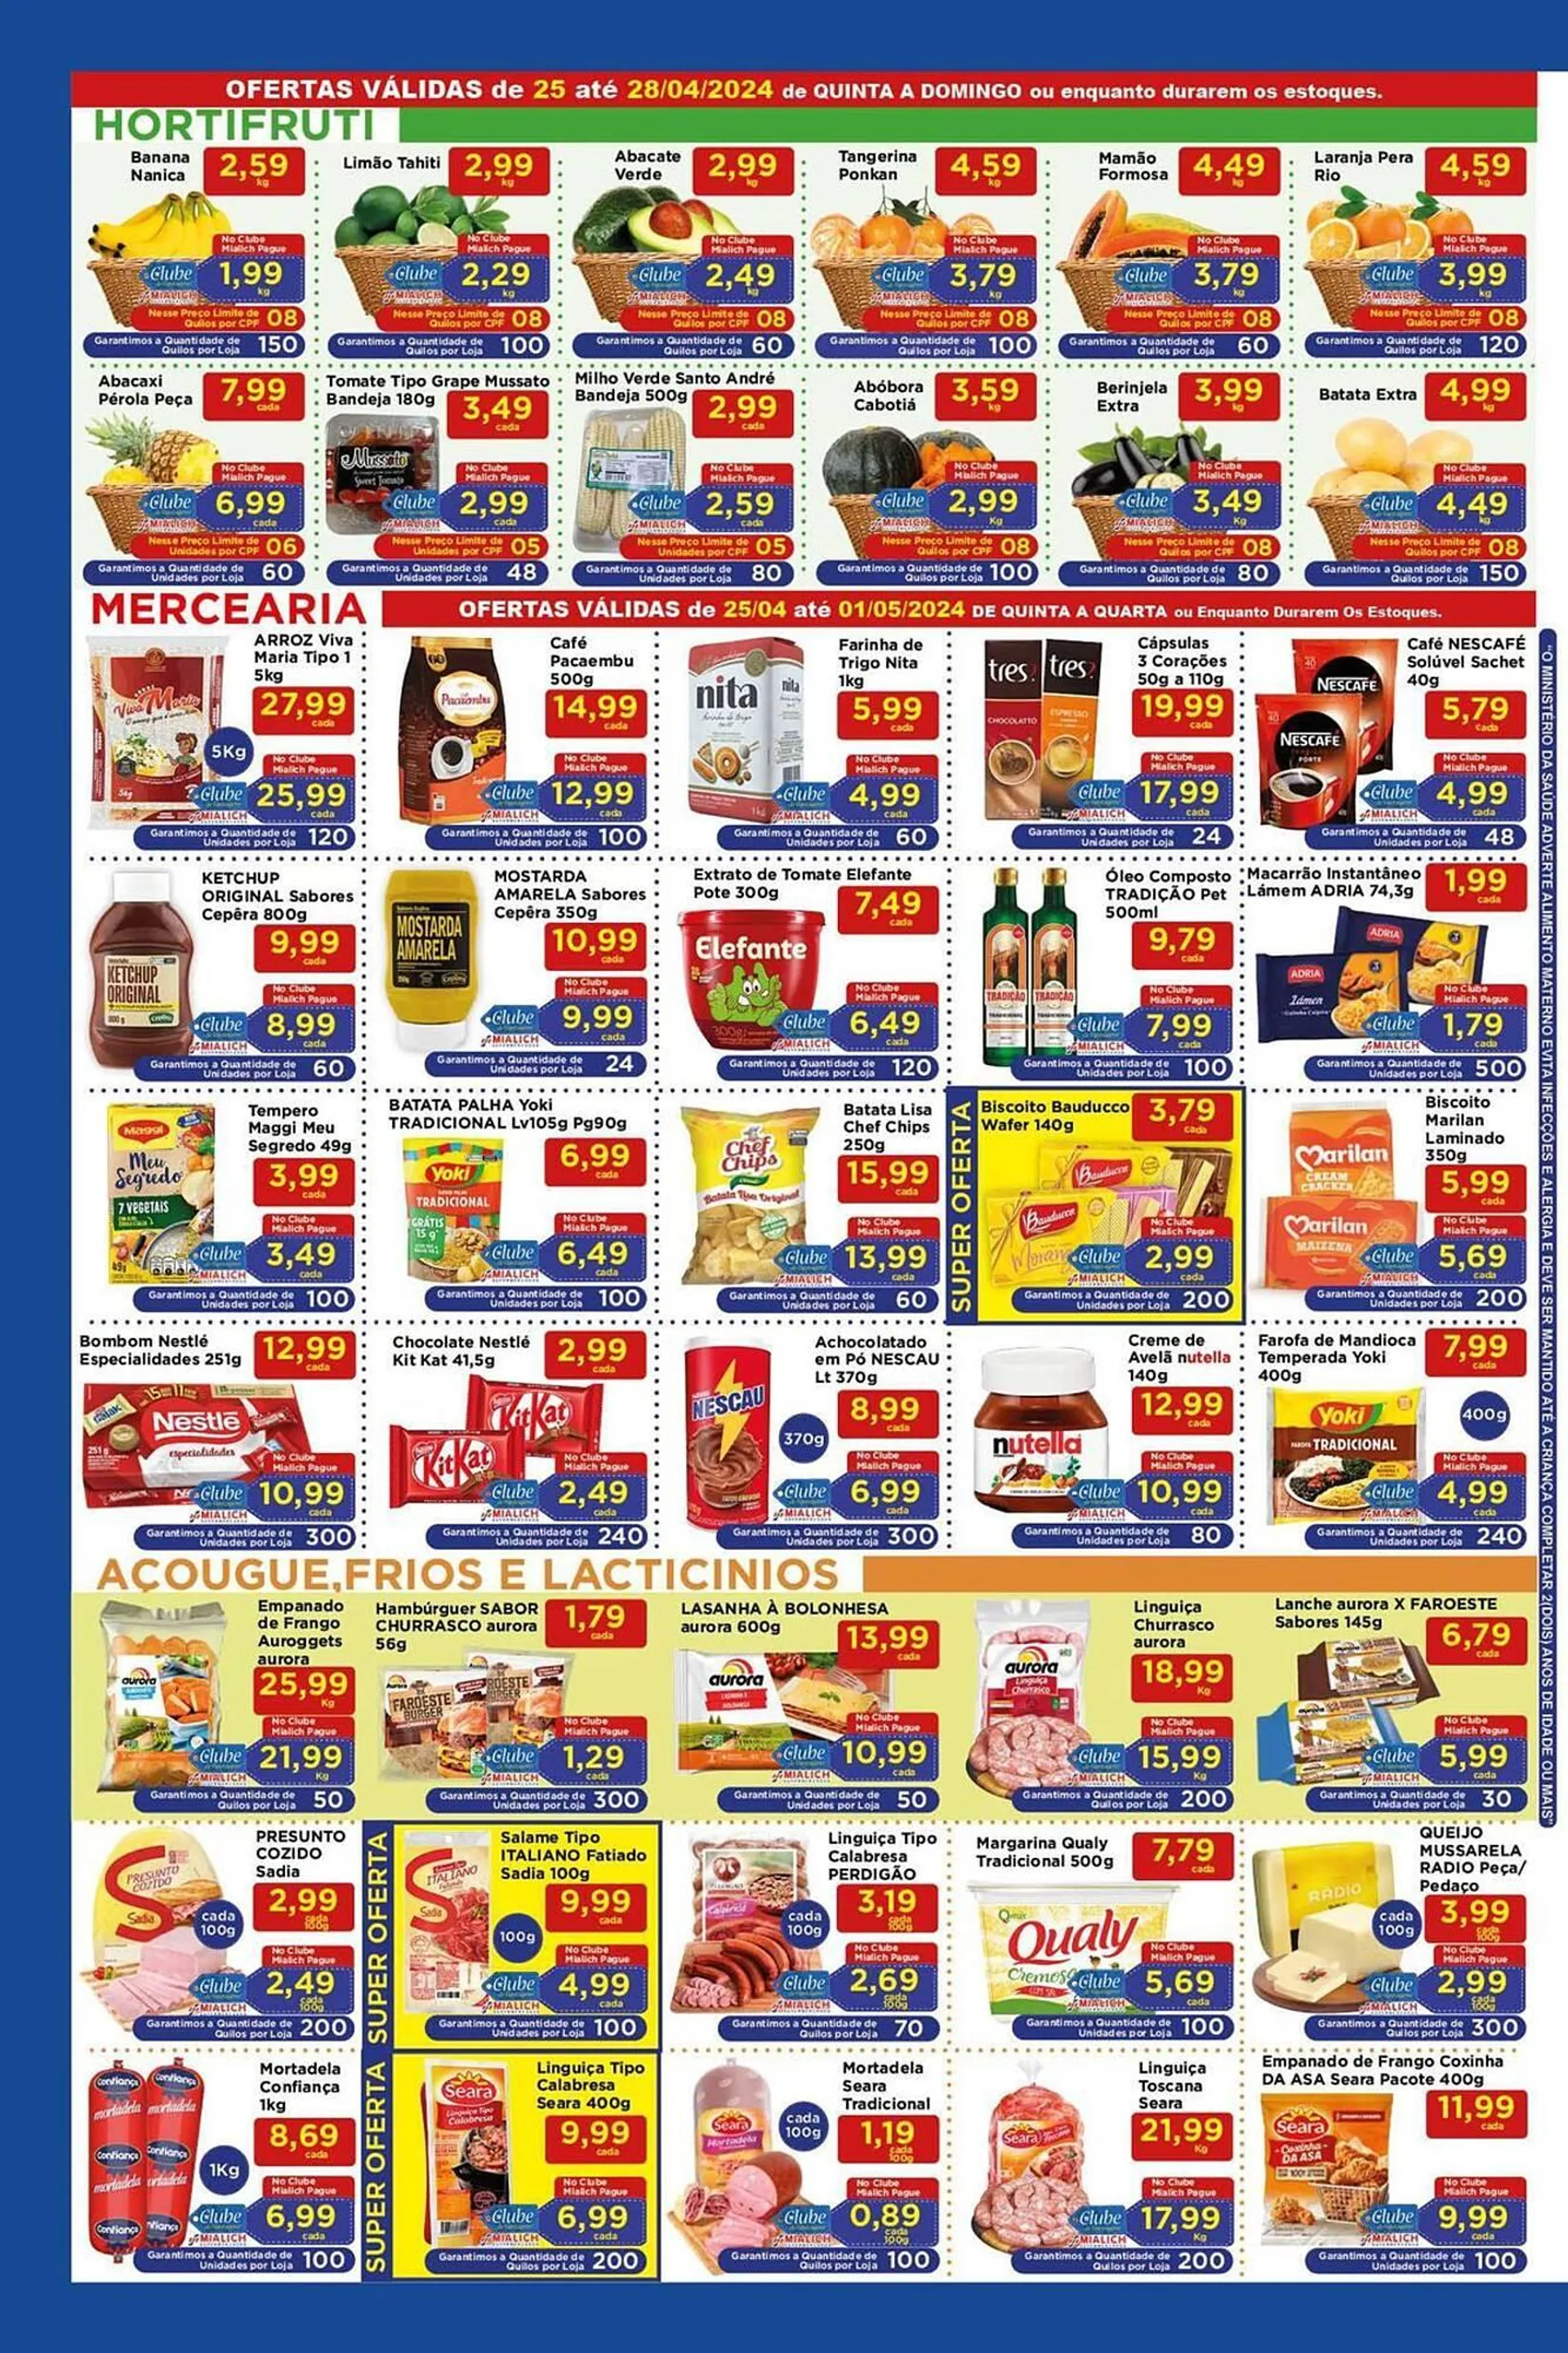 Catálogo Mialich Supermercados - 2